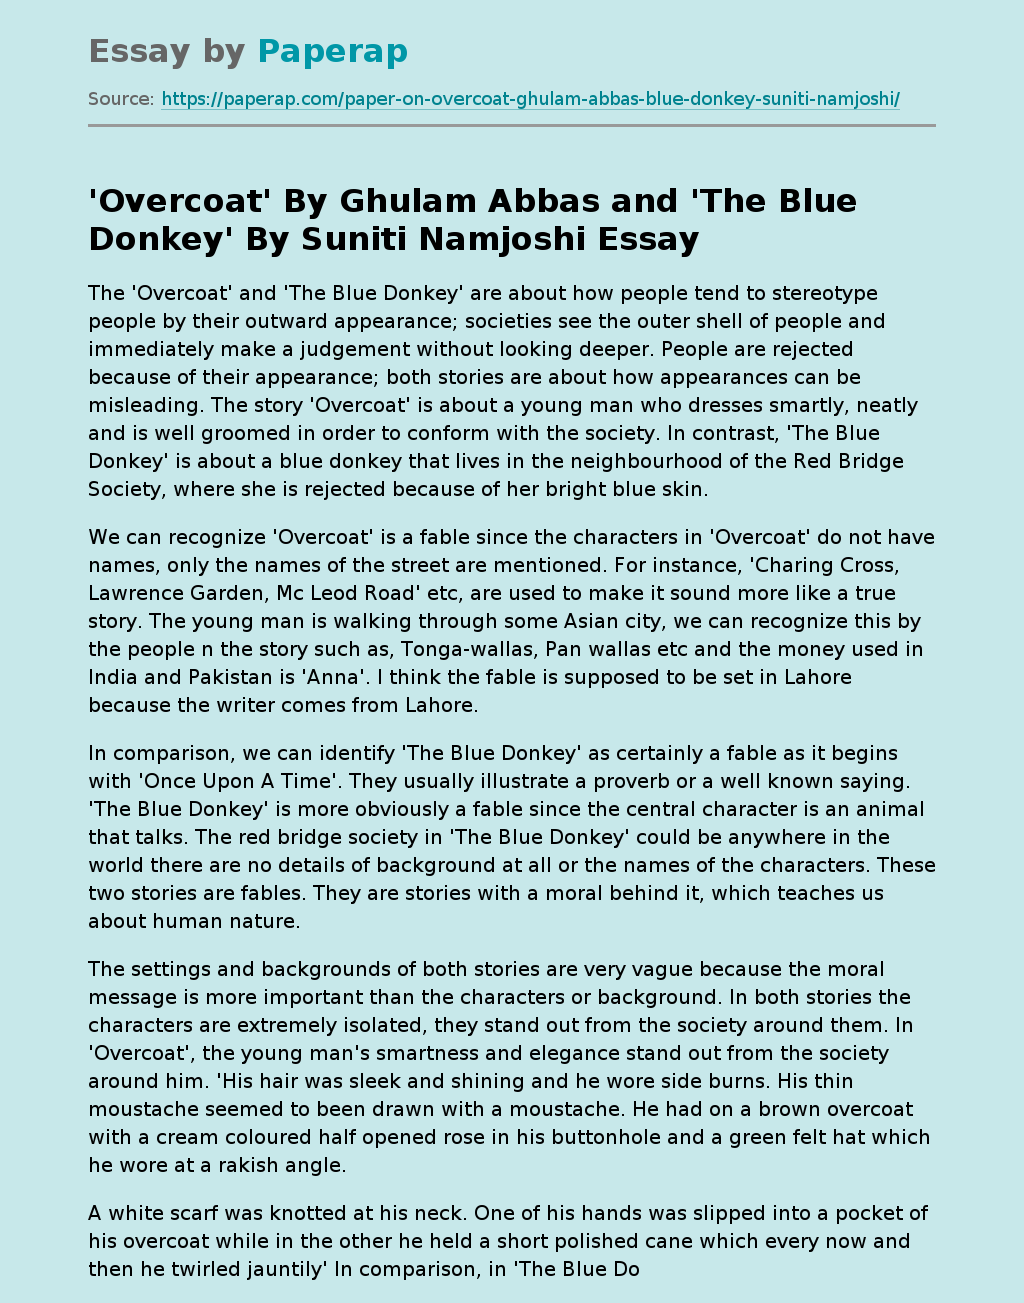 'Overcoat' By Ghulam Abbas and 'The Blue Donkey' By Suniti Namjoshi